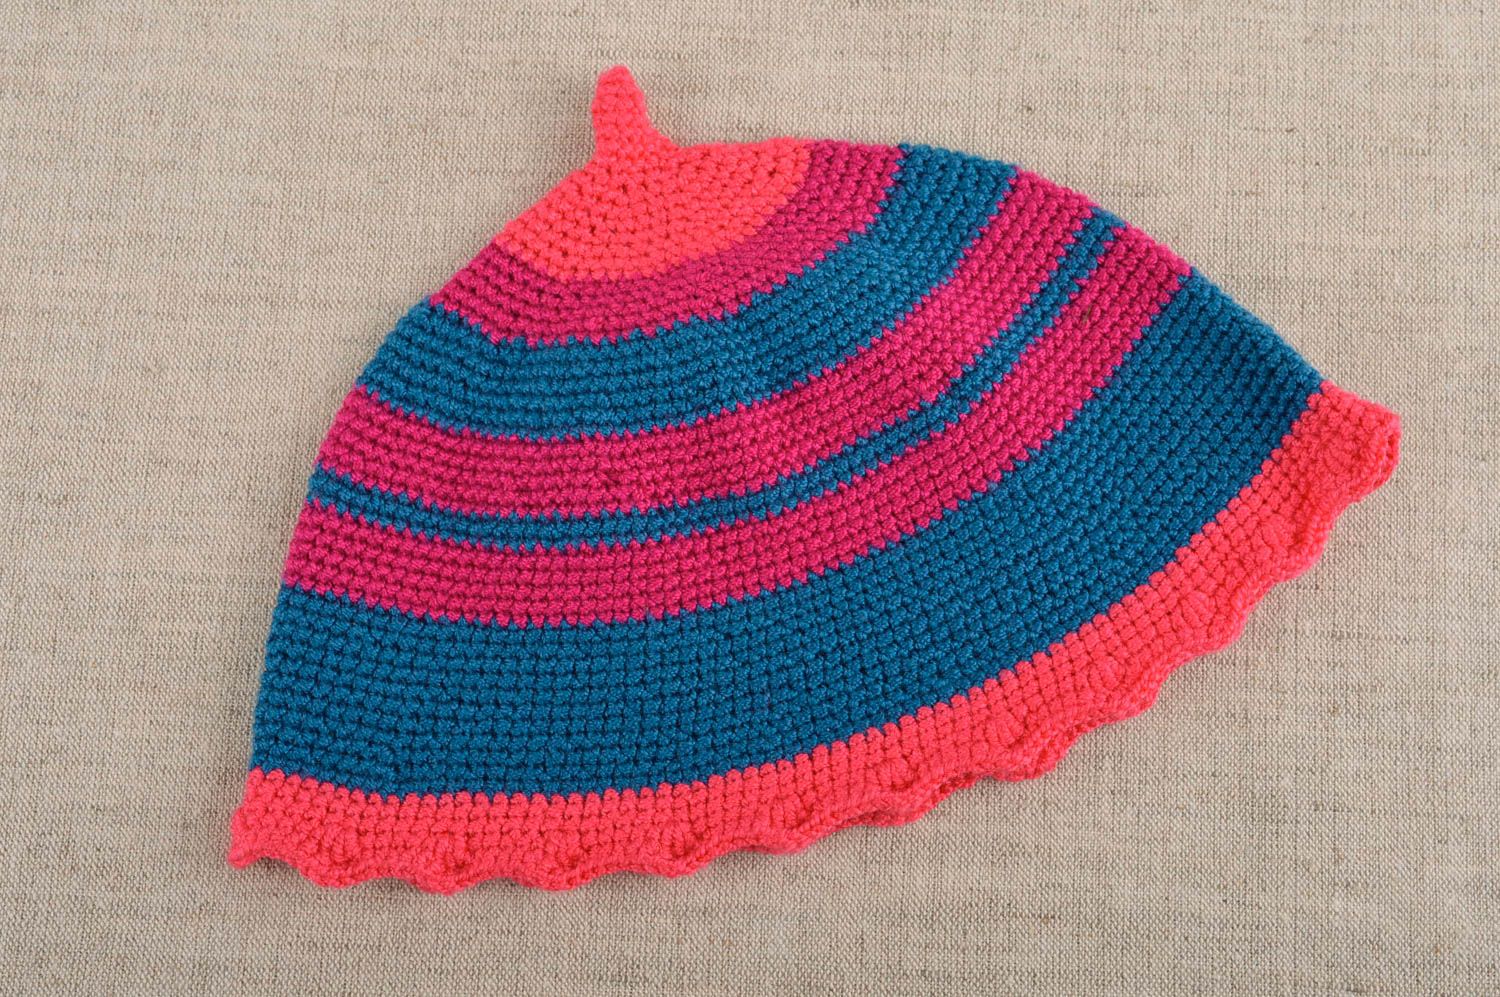 Handmade hat designer hat knitted hat crocheted hat warm hat gift for baby photo 1